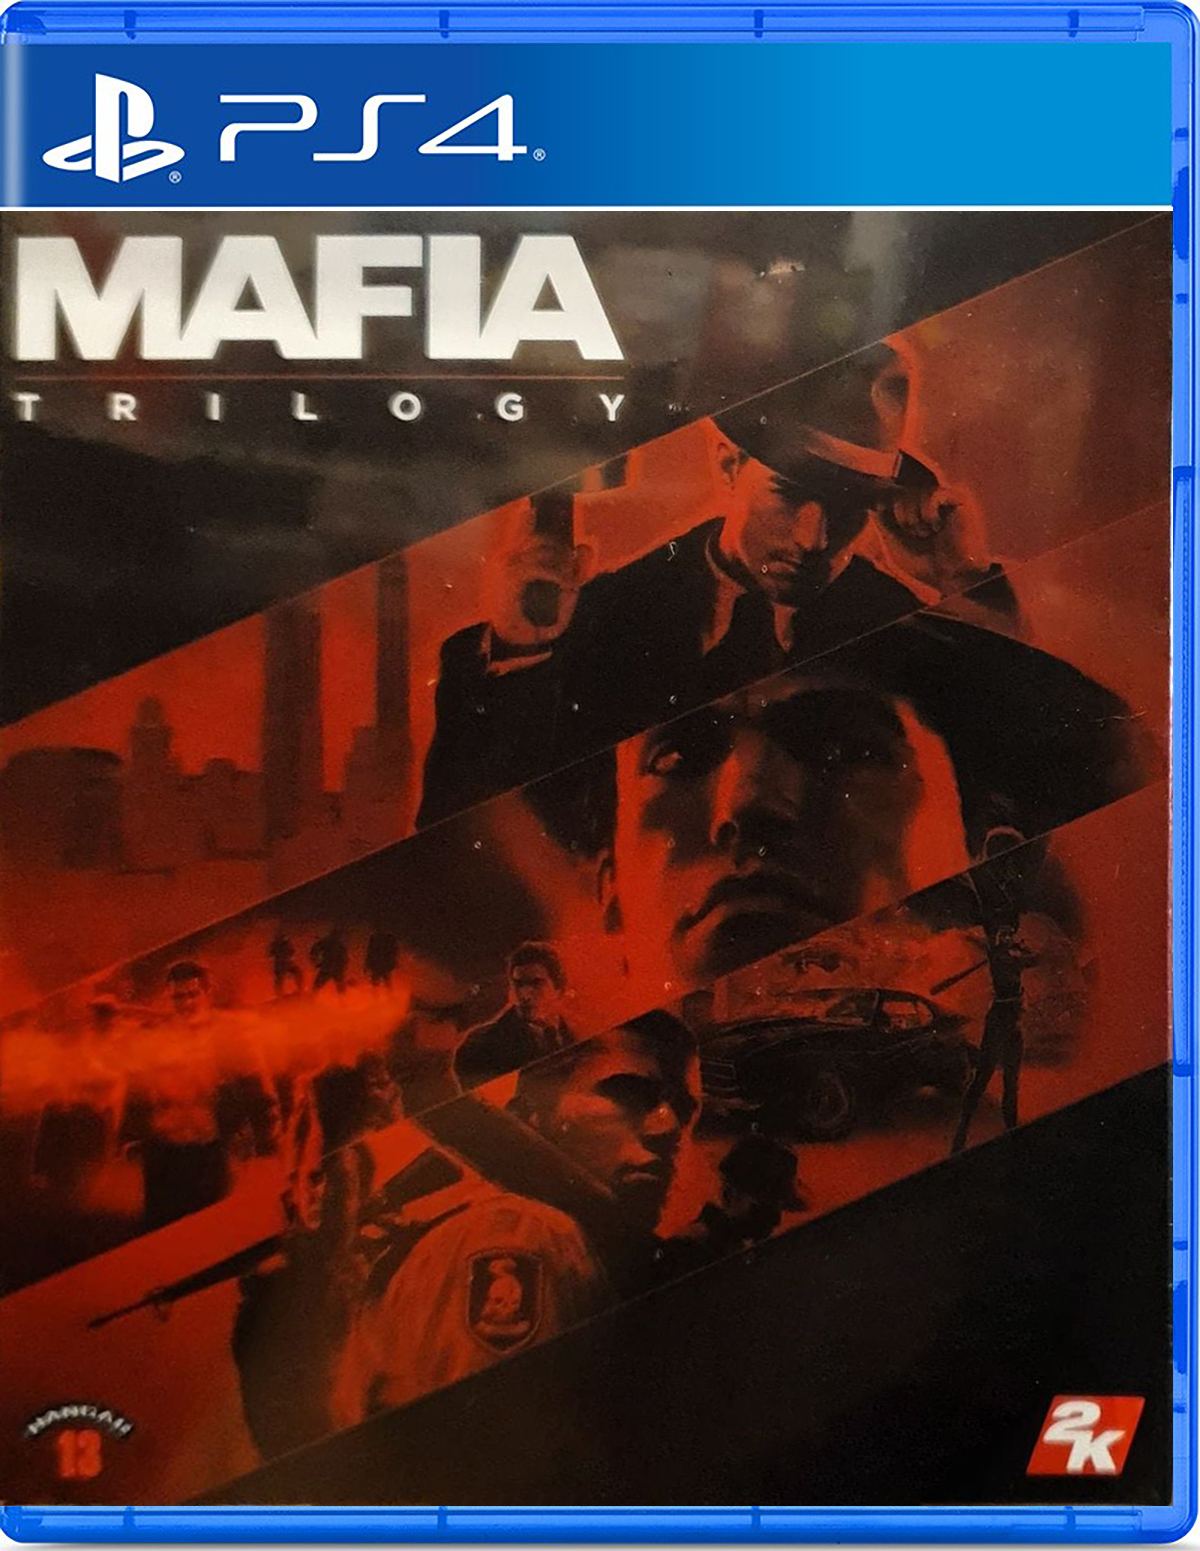 Mafia: Trilogy, Official Trailer